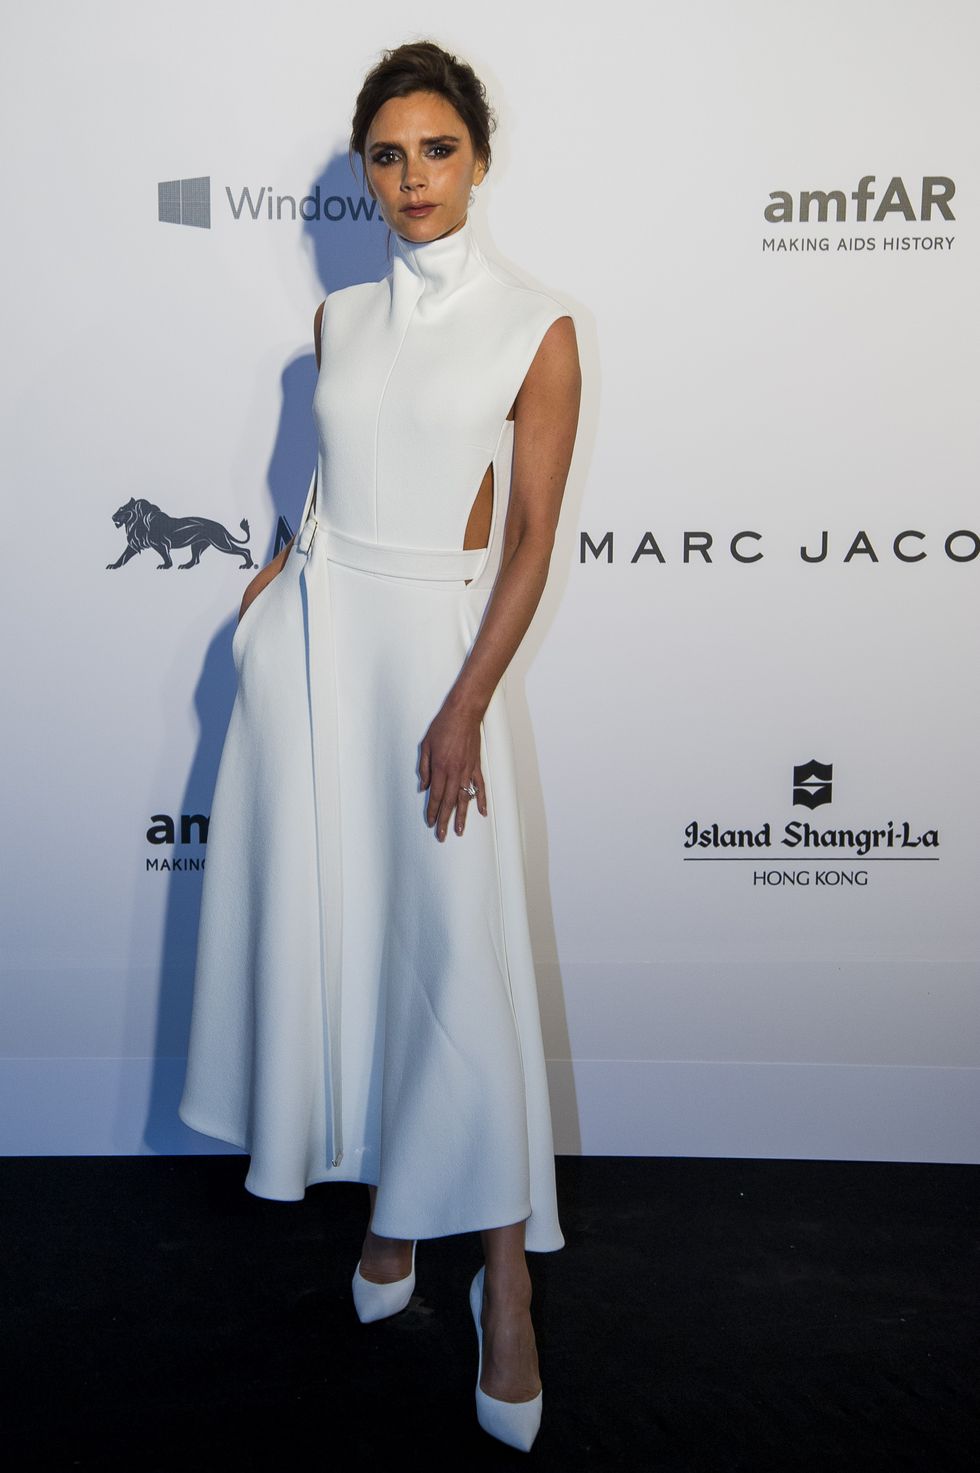 Victoria Beckham wears white dress to the Hong Kong amfAR Gala 2015